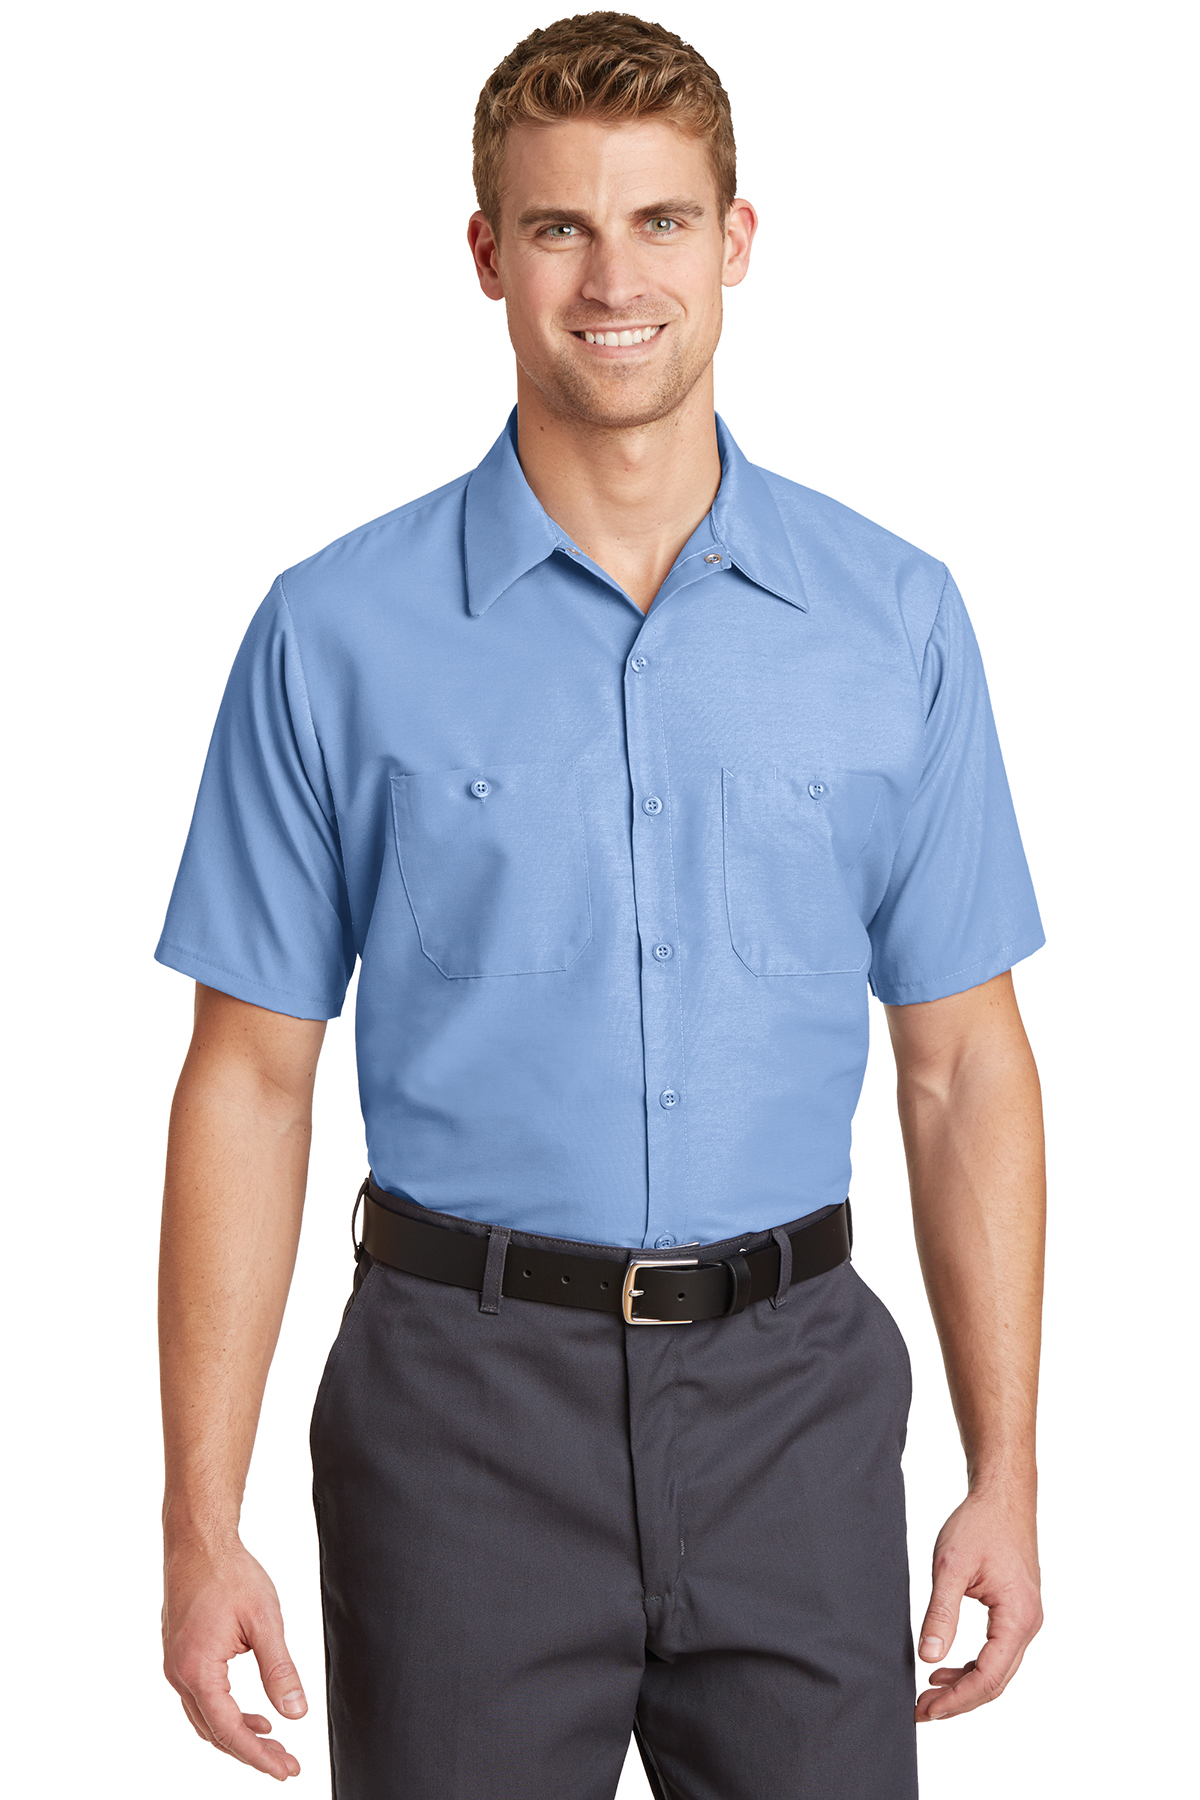 Red Kap Mens Short Sleeve Industrial Work Shirt Postman Blue 